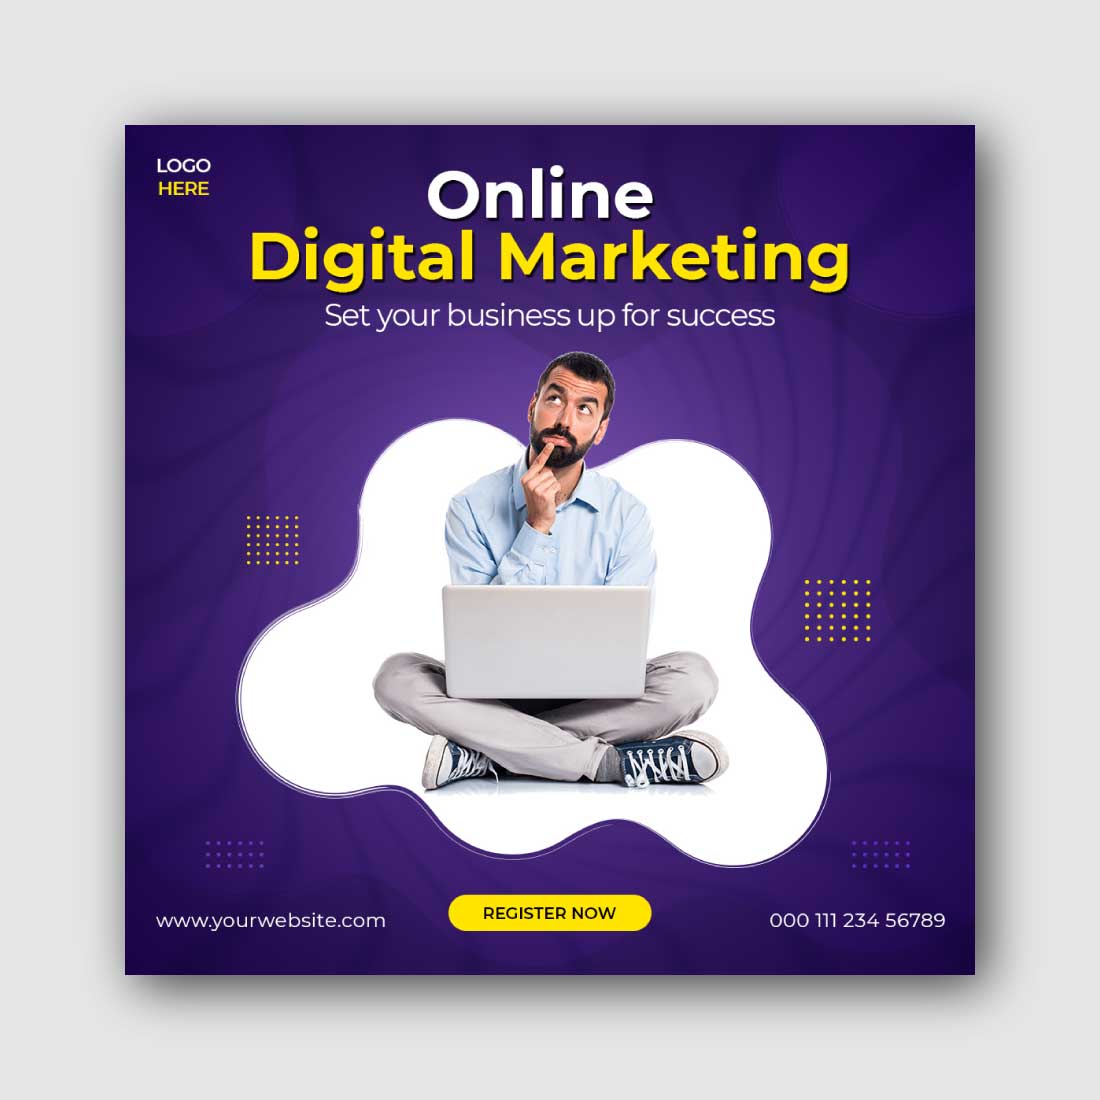 Digital Marketing Agency Social Media Post Template cover image.